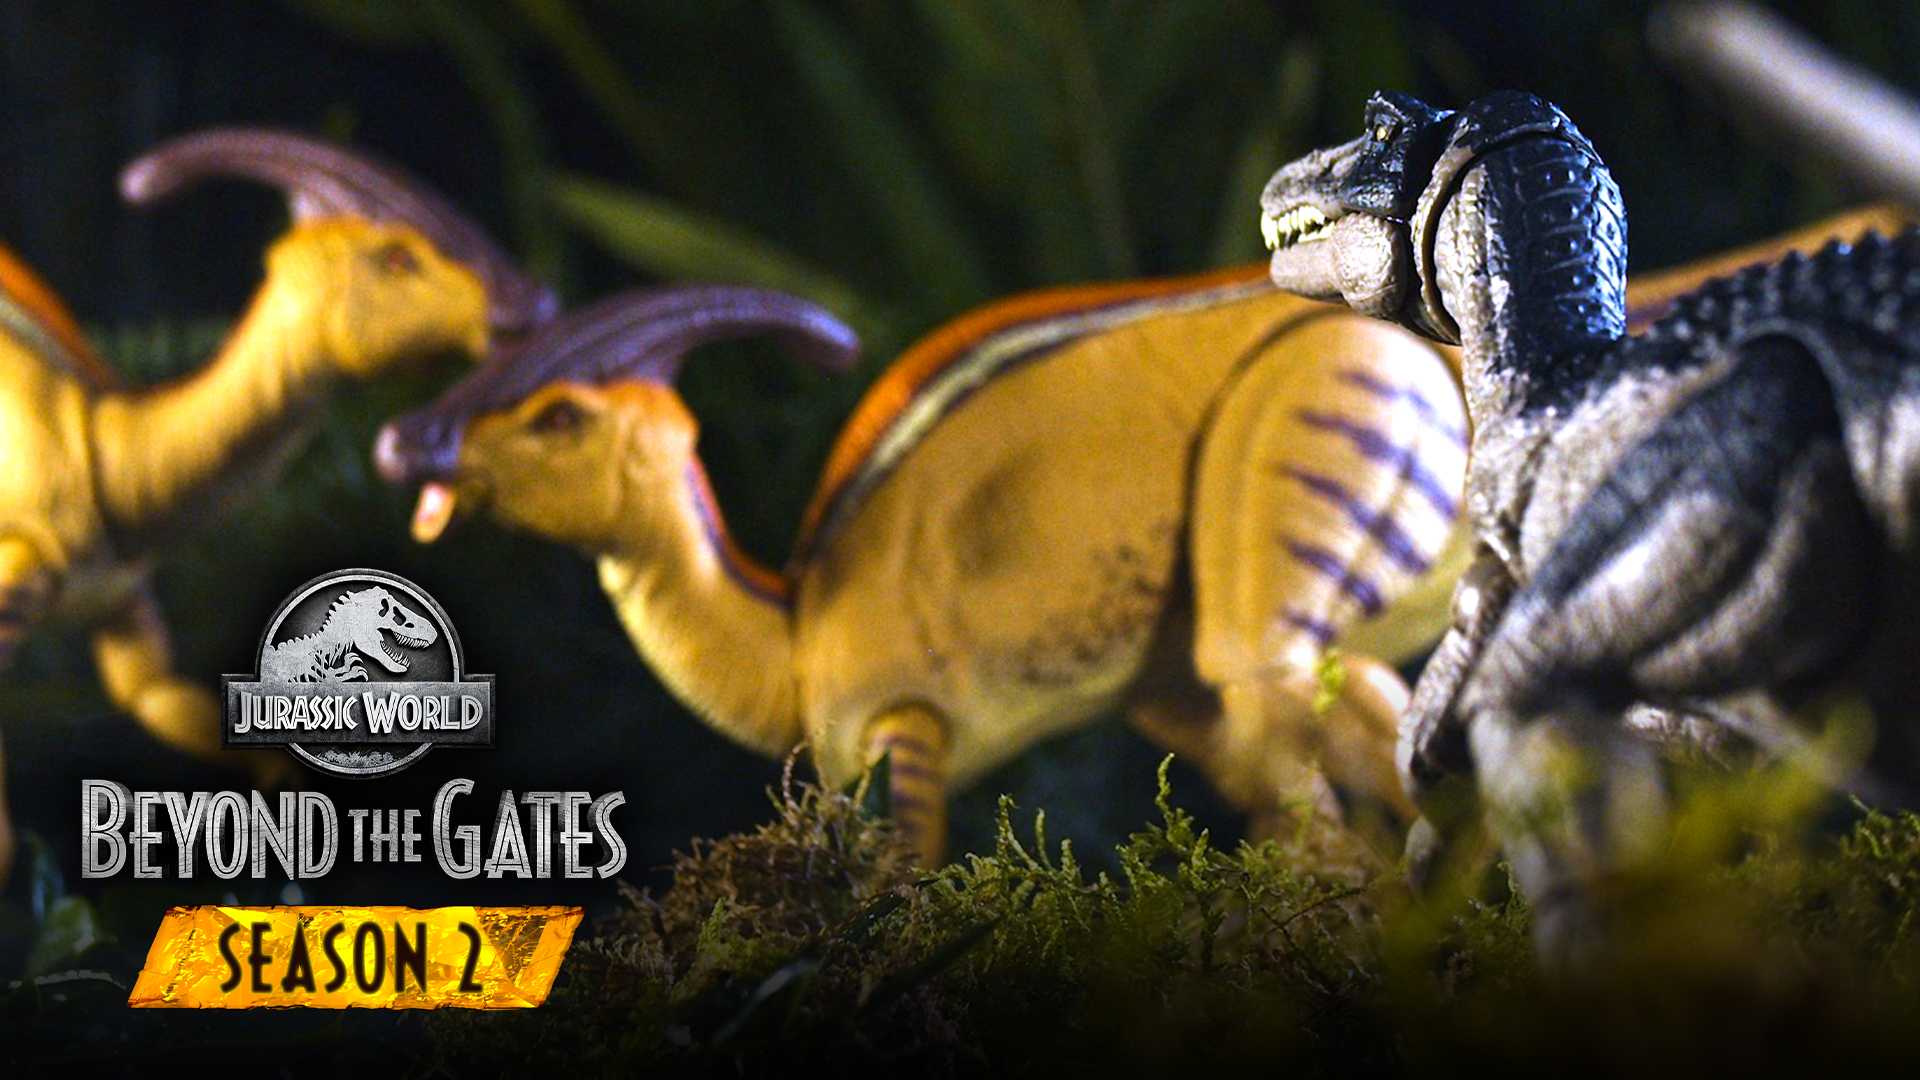 Beyond The Gates Returns with the AllNew Jurassic World HAMMOND